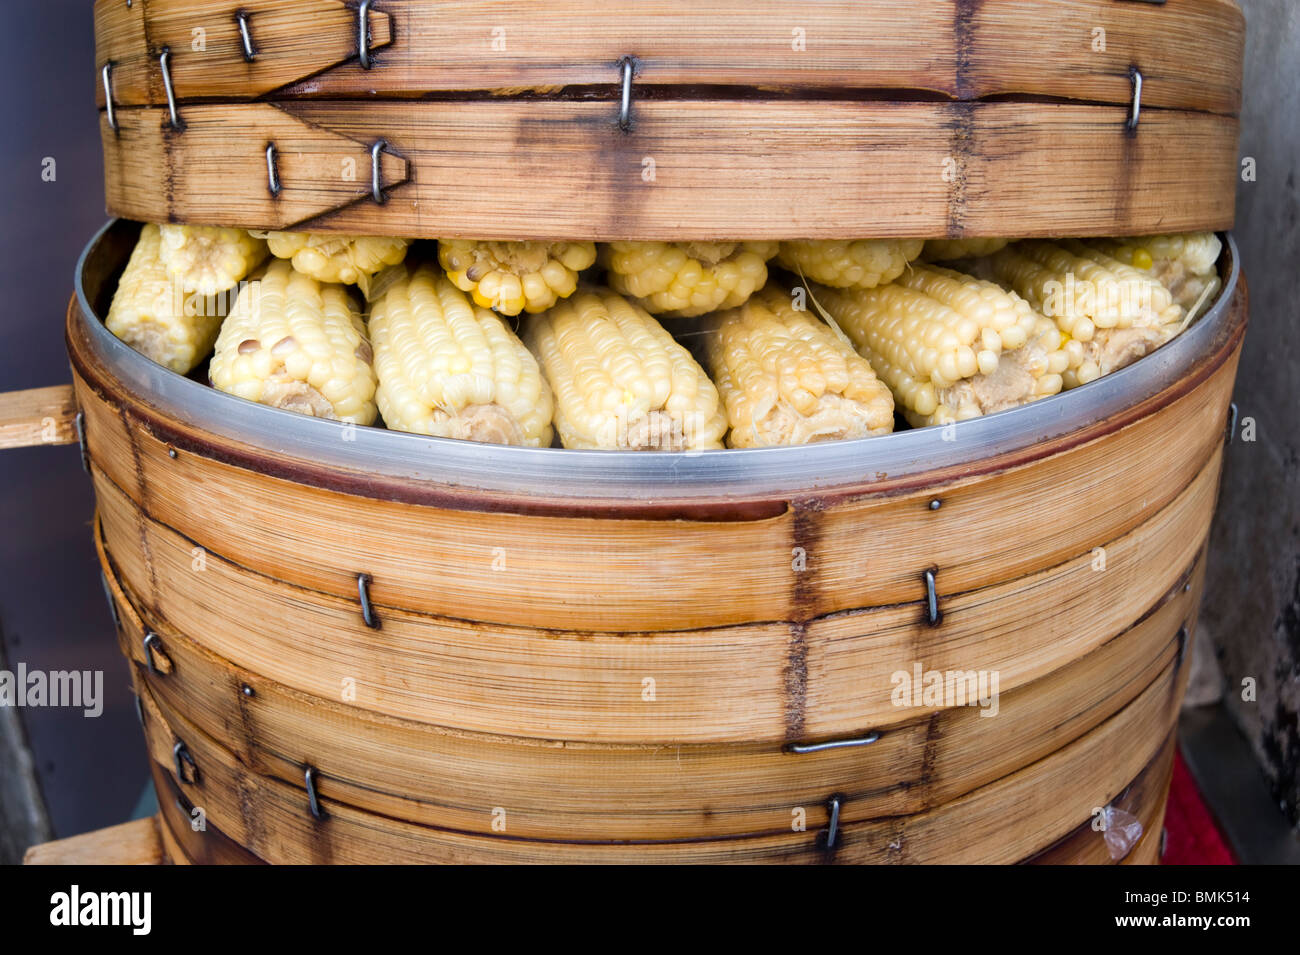 Corn on the cob street food in bamboo baskets, Shanghai, China Stock Photo